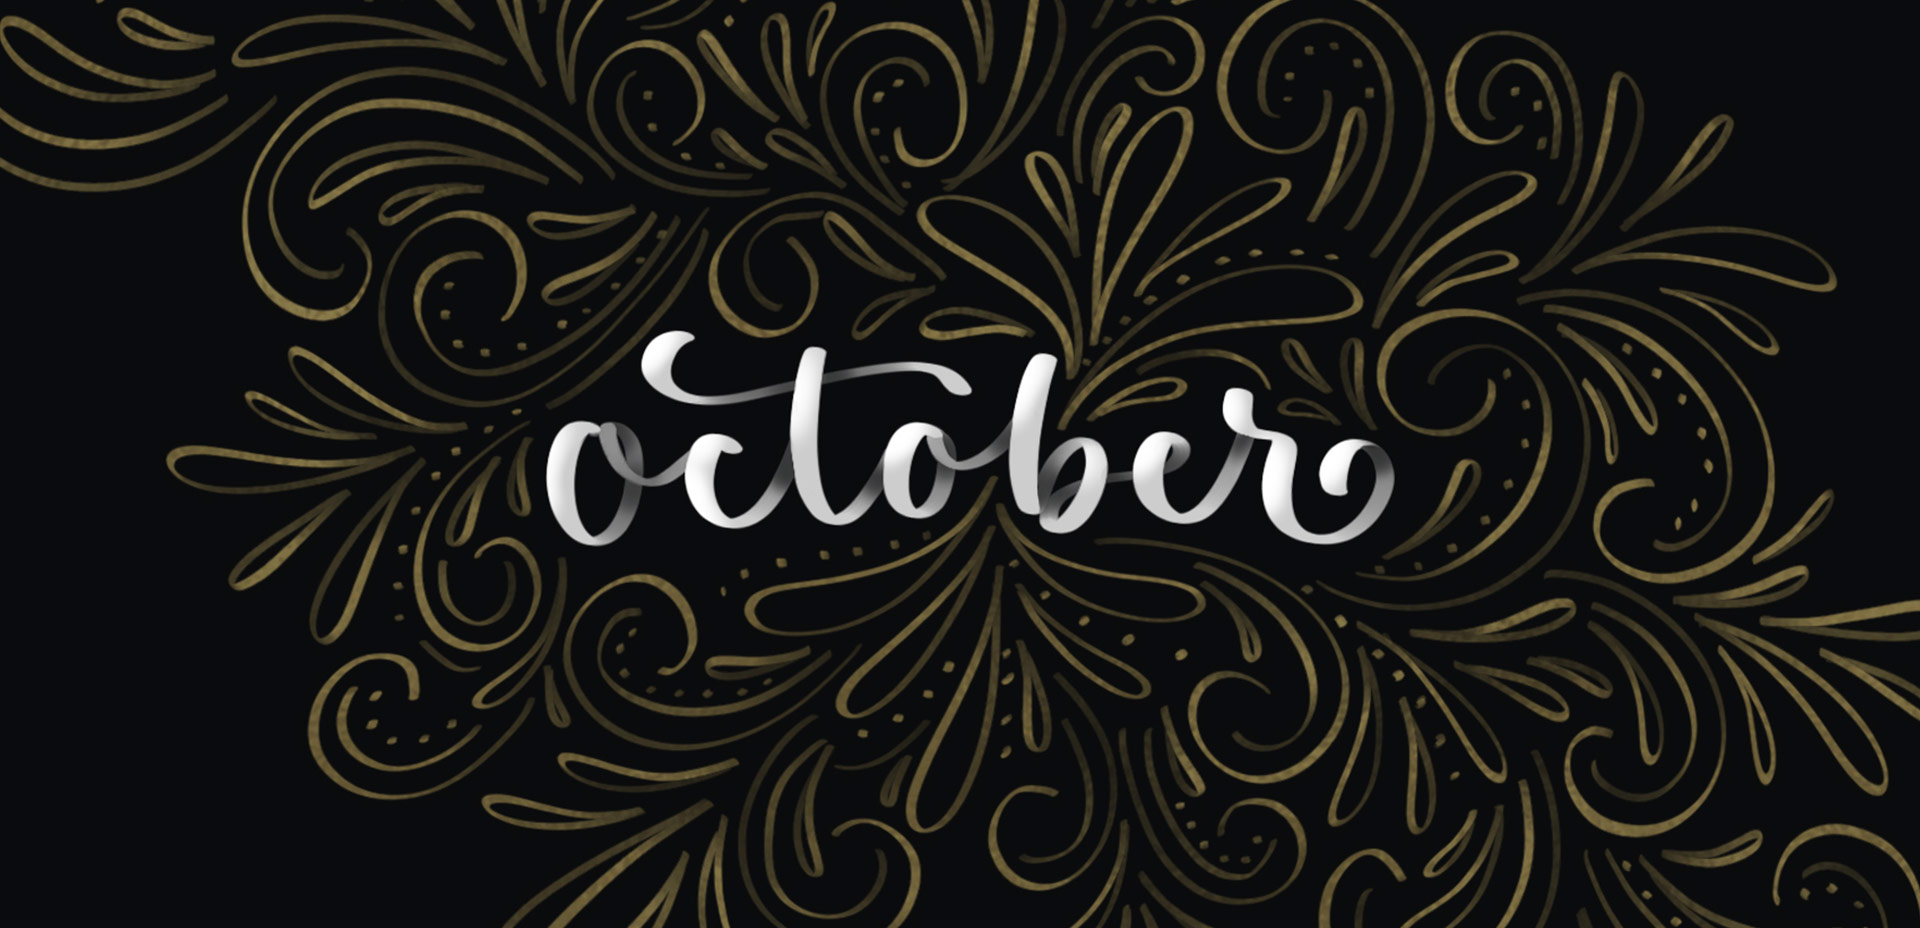 October Wallpapers